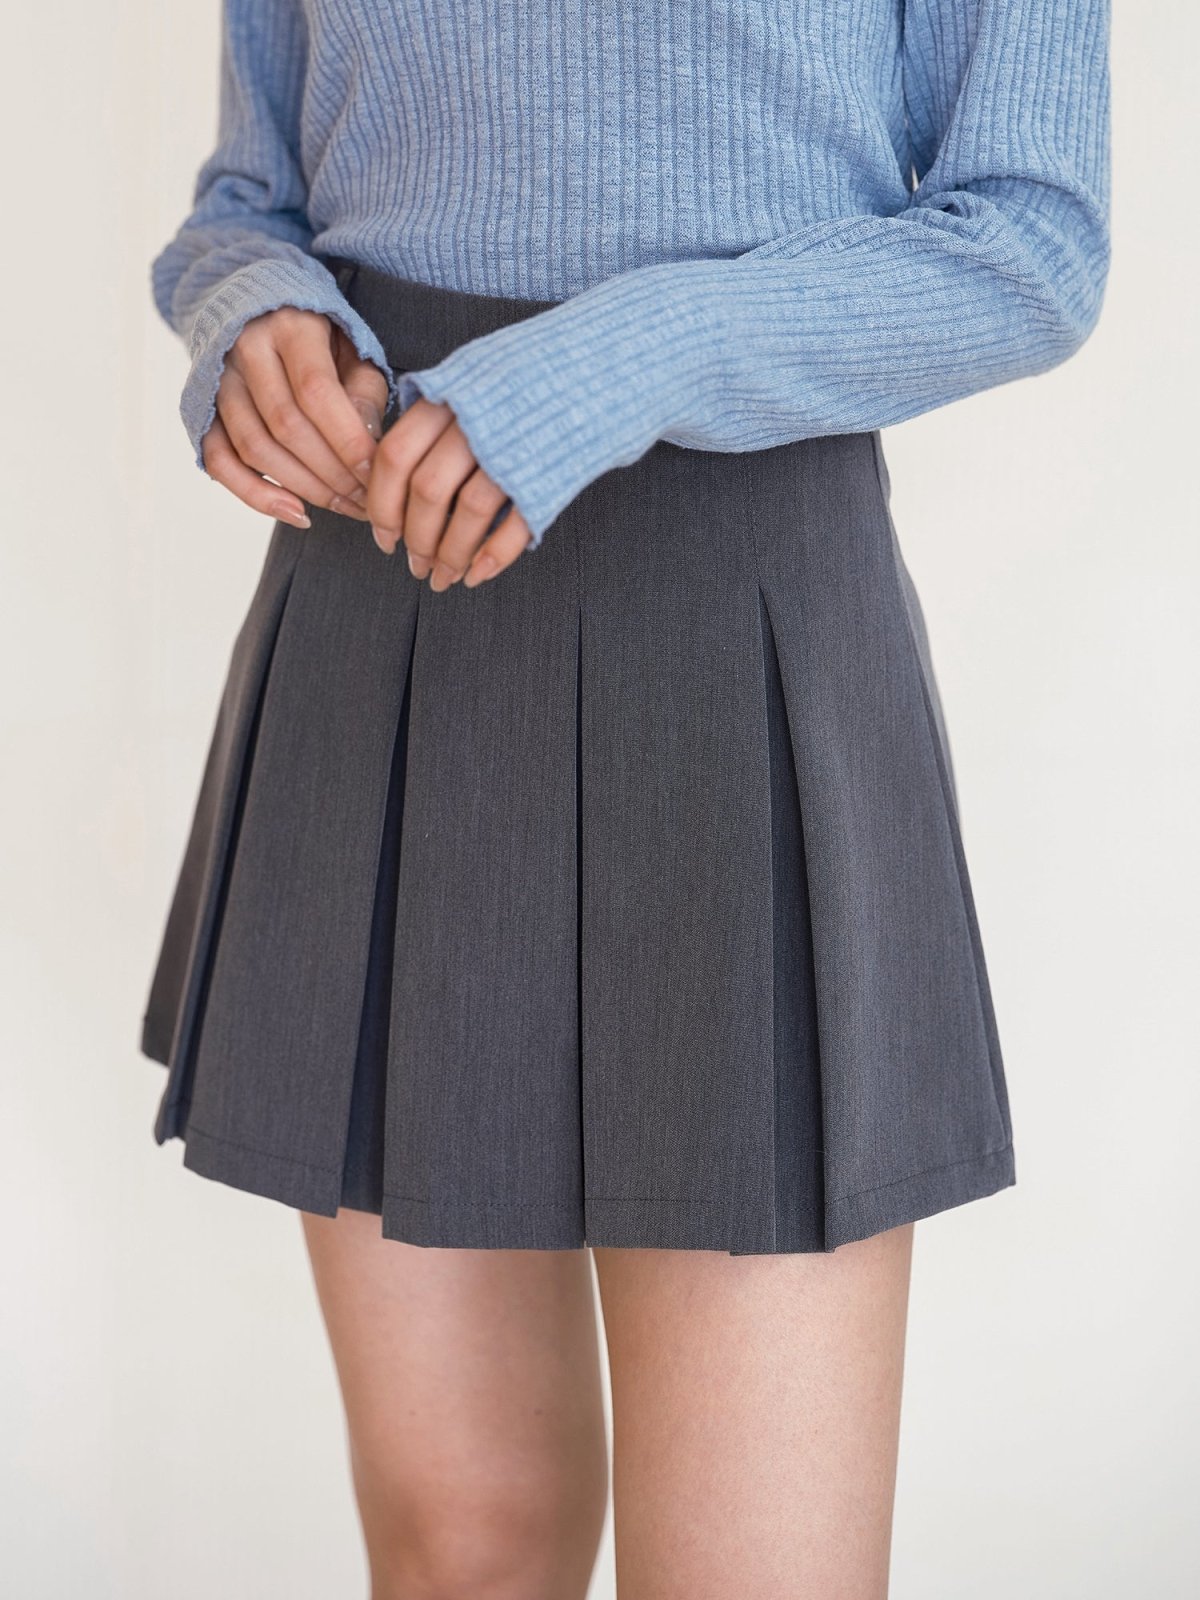 Hiro High Waisted Pleated Mini Skirt - DAG-G-220095DarkGrayS - Charcoal - S - D'ZAGE Designs